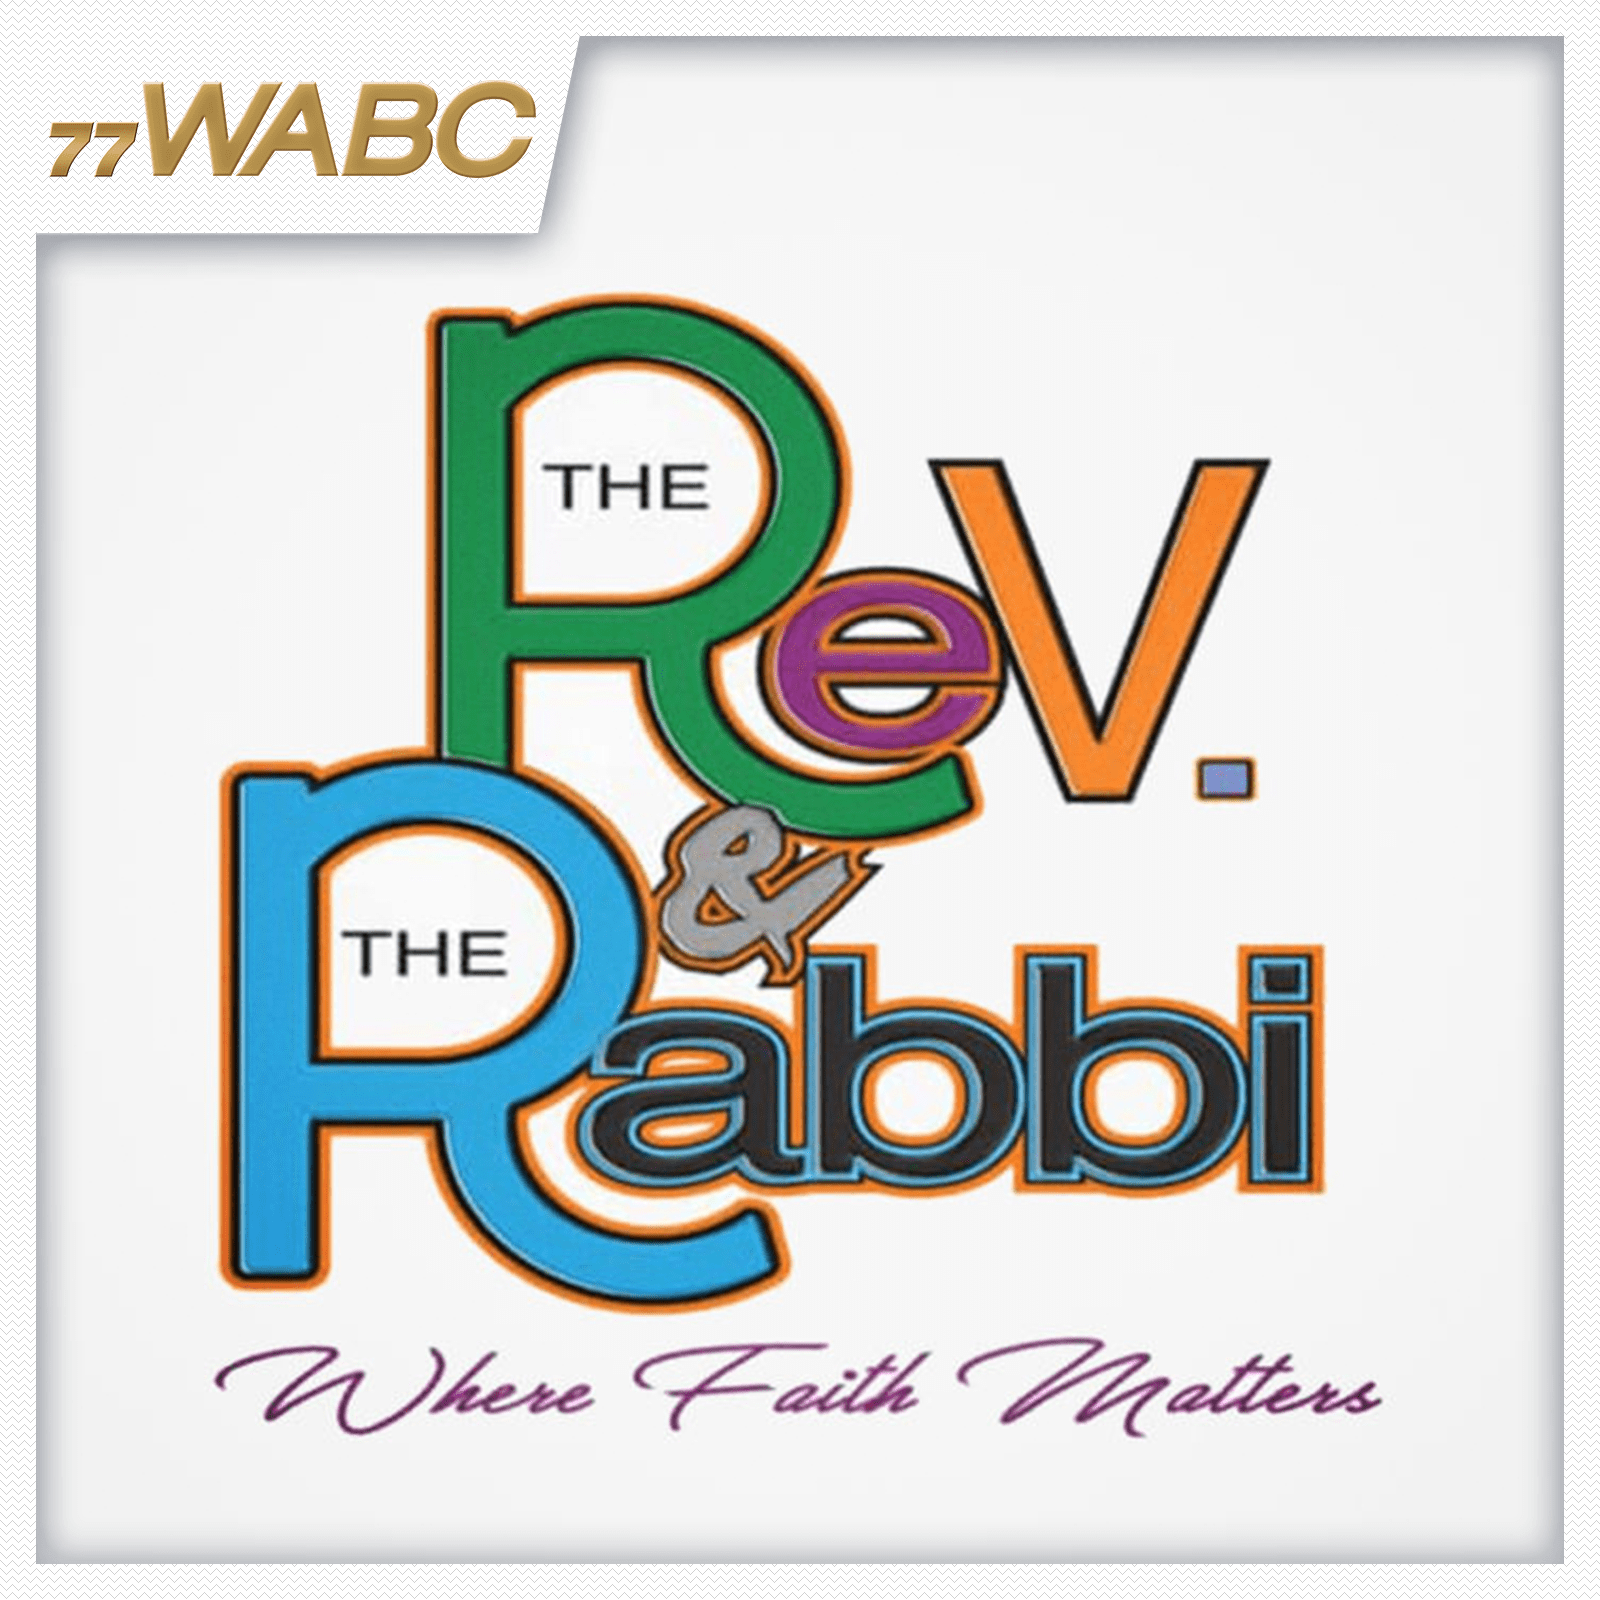 rev-and-the-rabbi-new-logo479370